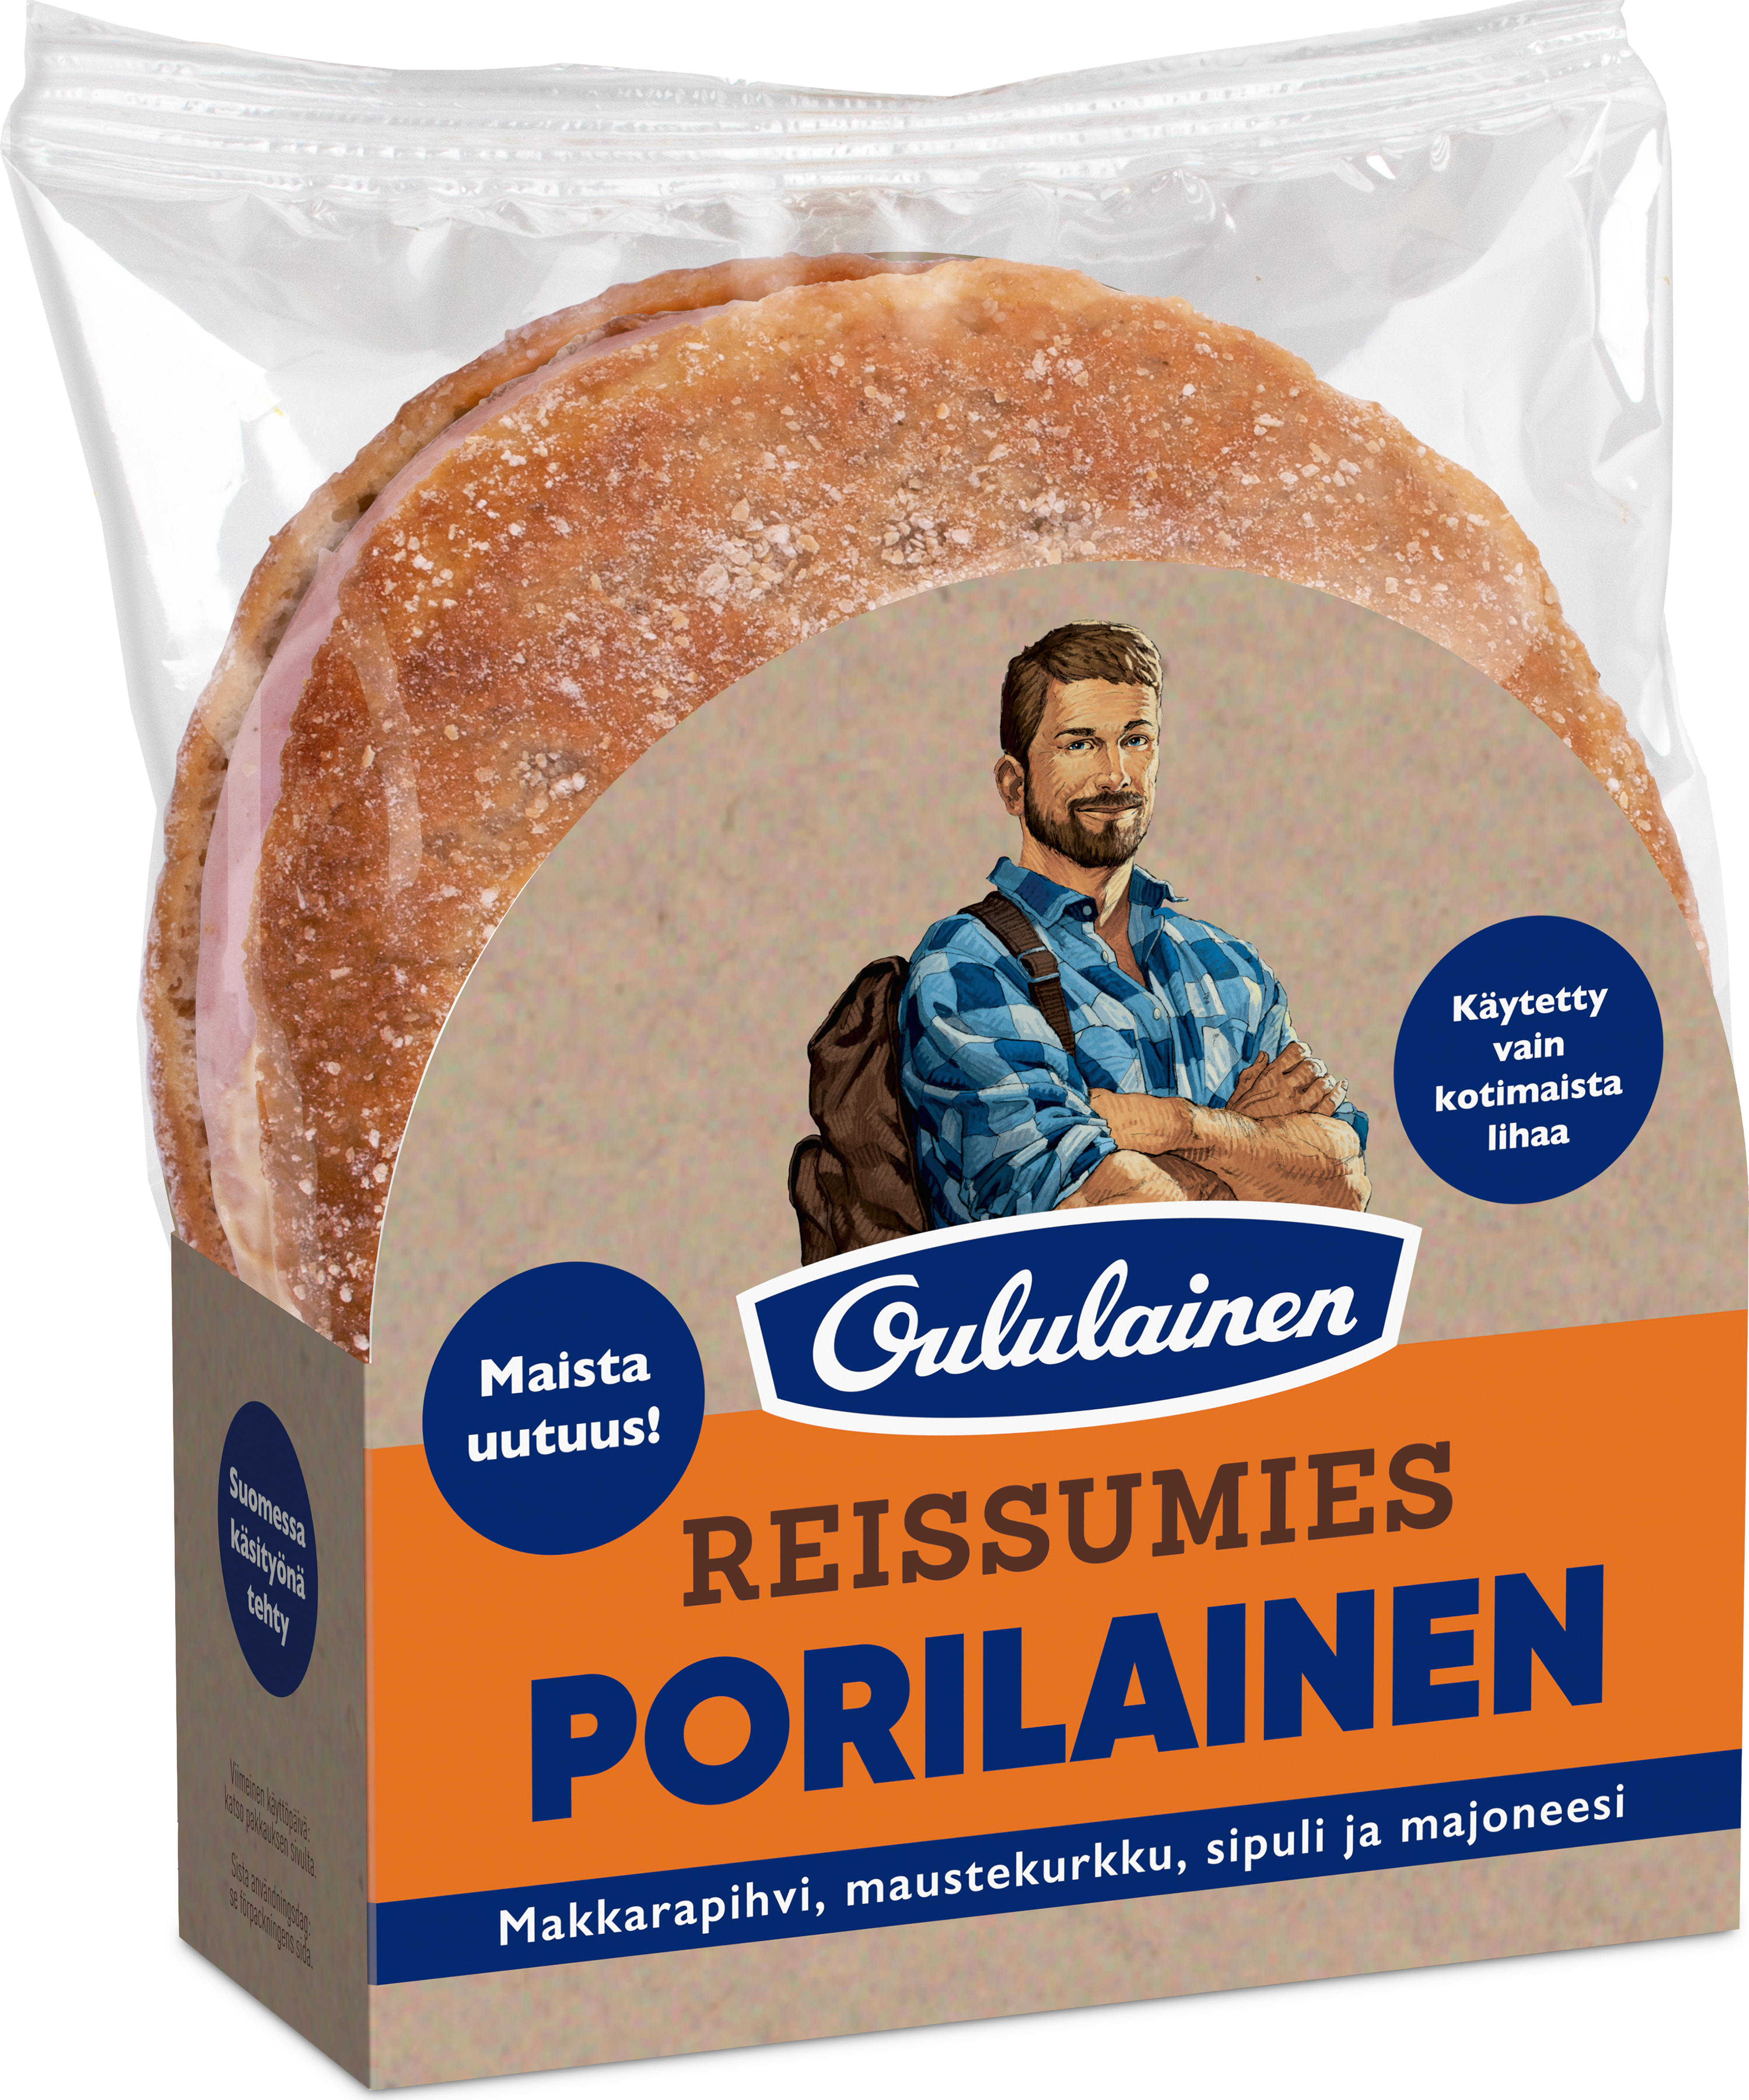 Oululainen Reissumies Porilainen 190g.jpg